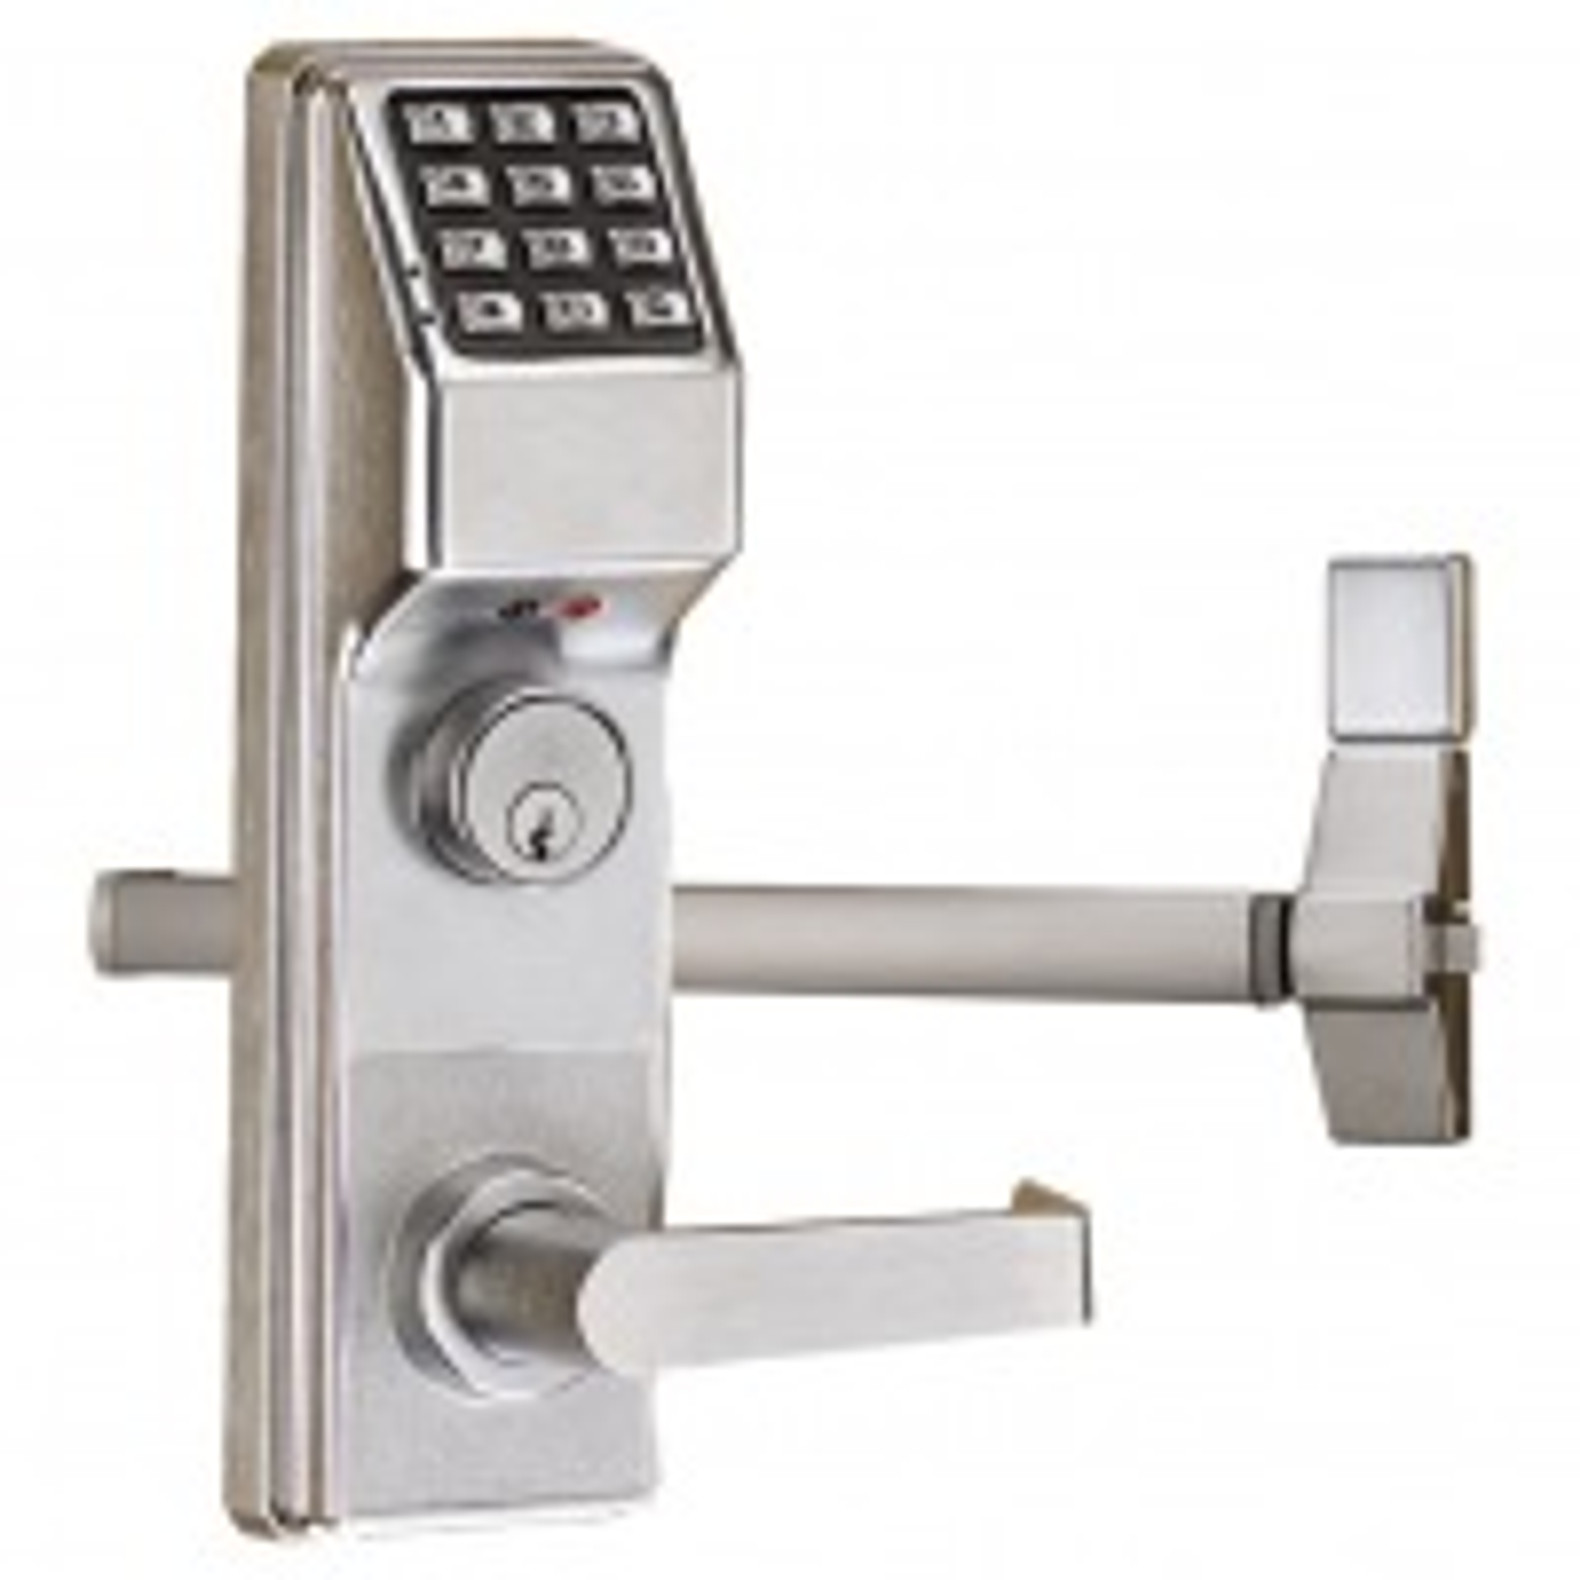 Alarm Lock Trilogy T2 100-User Weatherproof Interchangeable Core Electronic Digital Keypad Cylindrical Lock Leverset, Satin Chrome Finish by Alarm Loc - 3